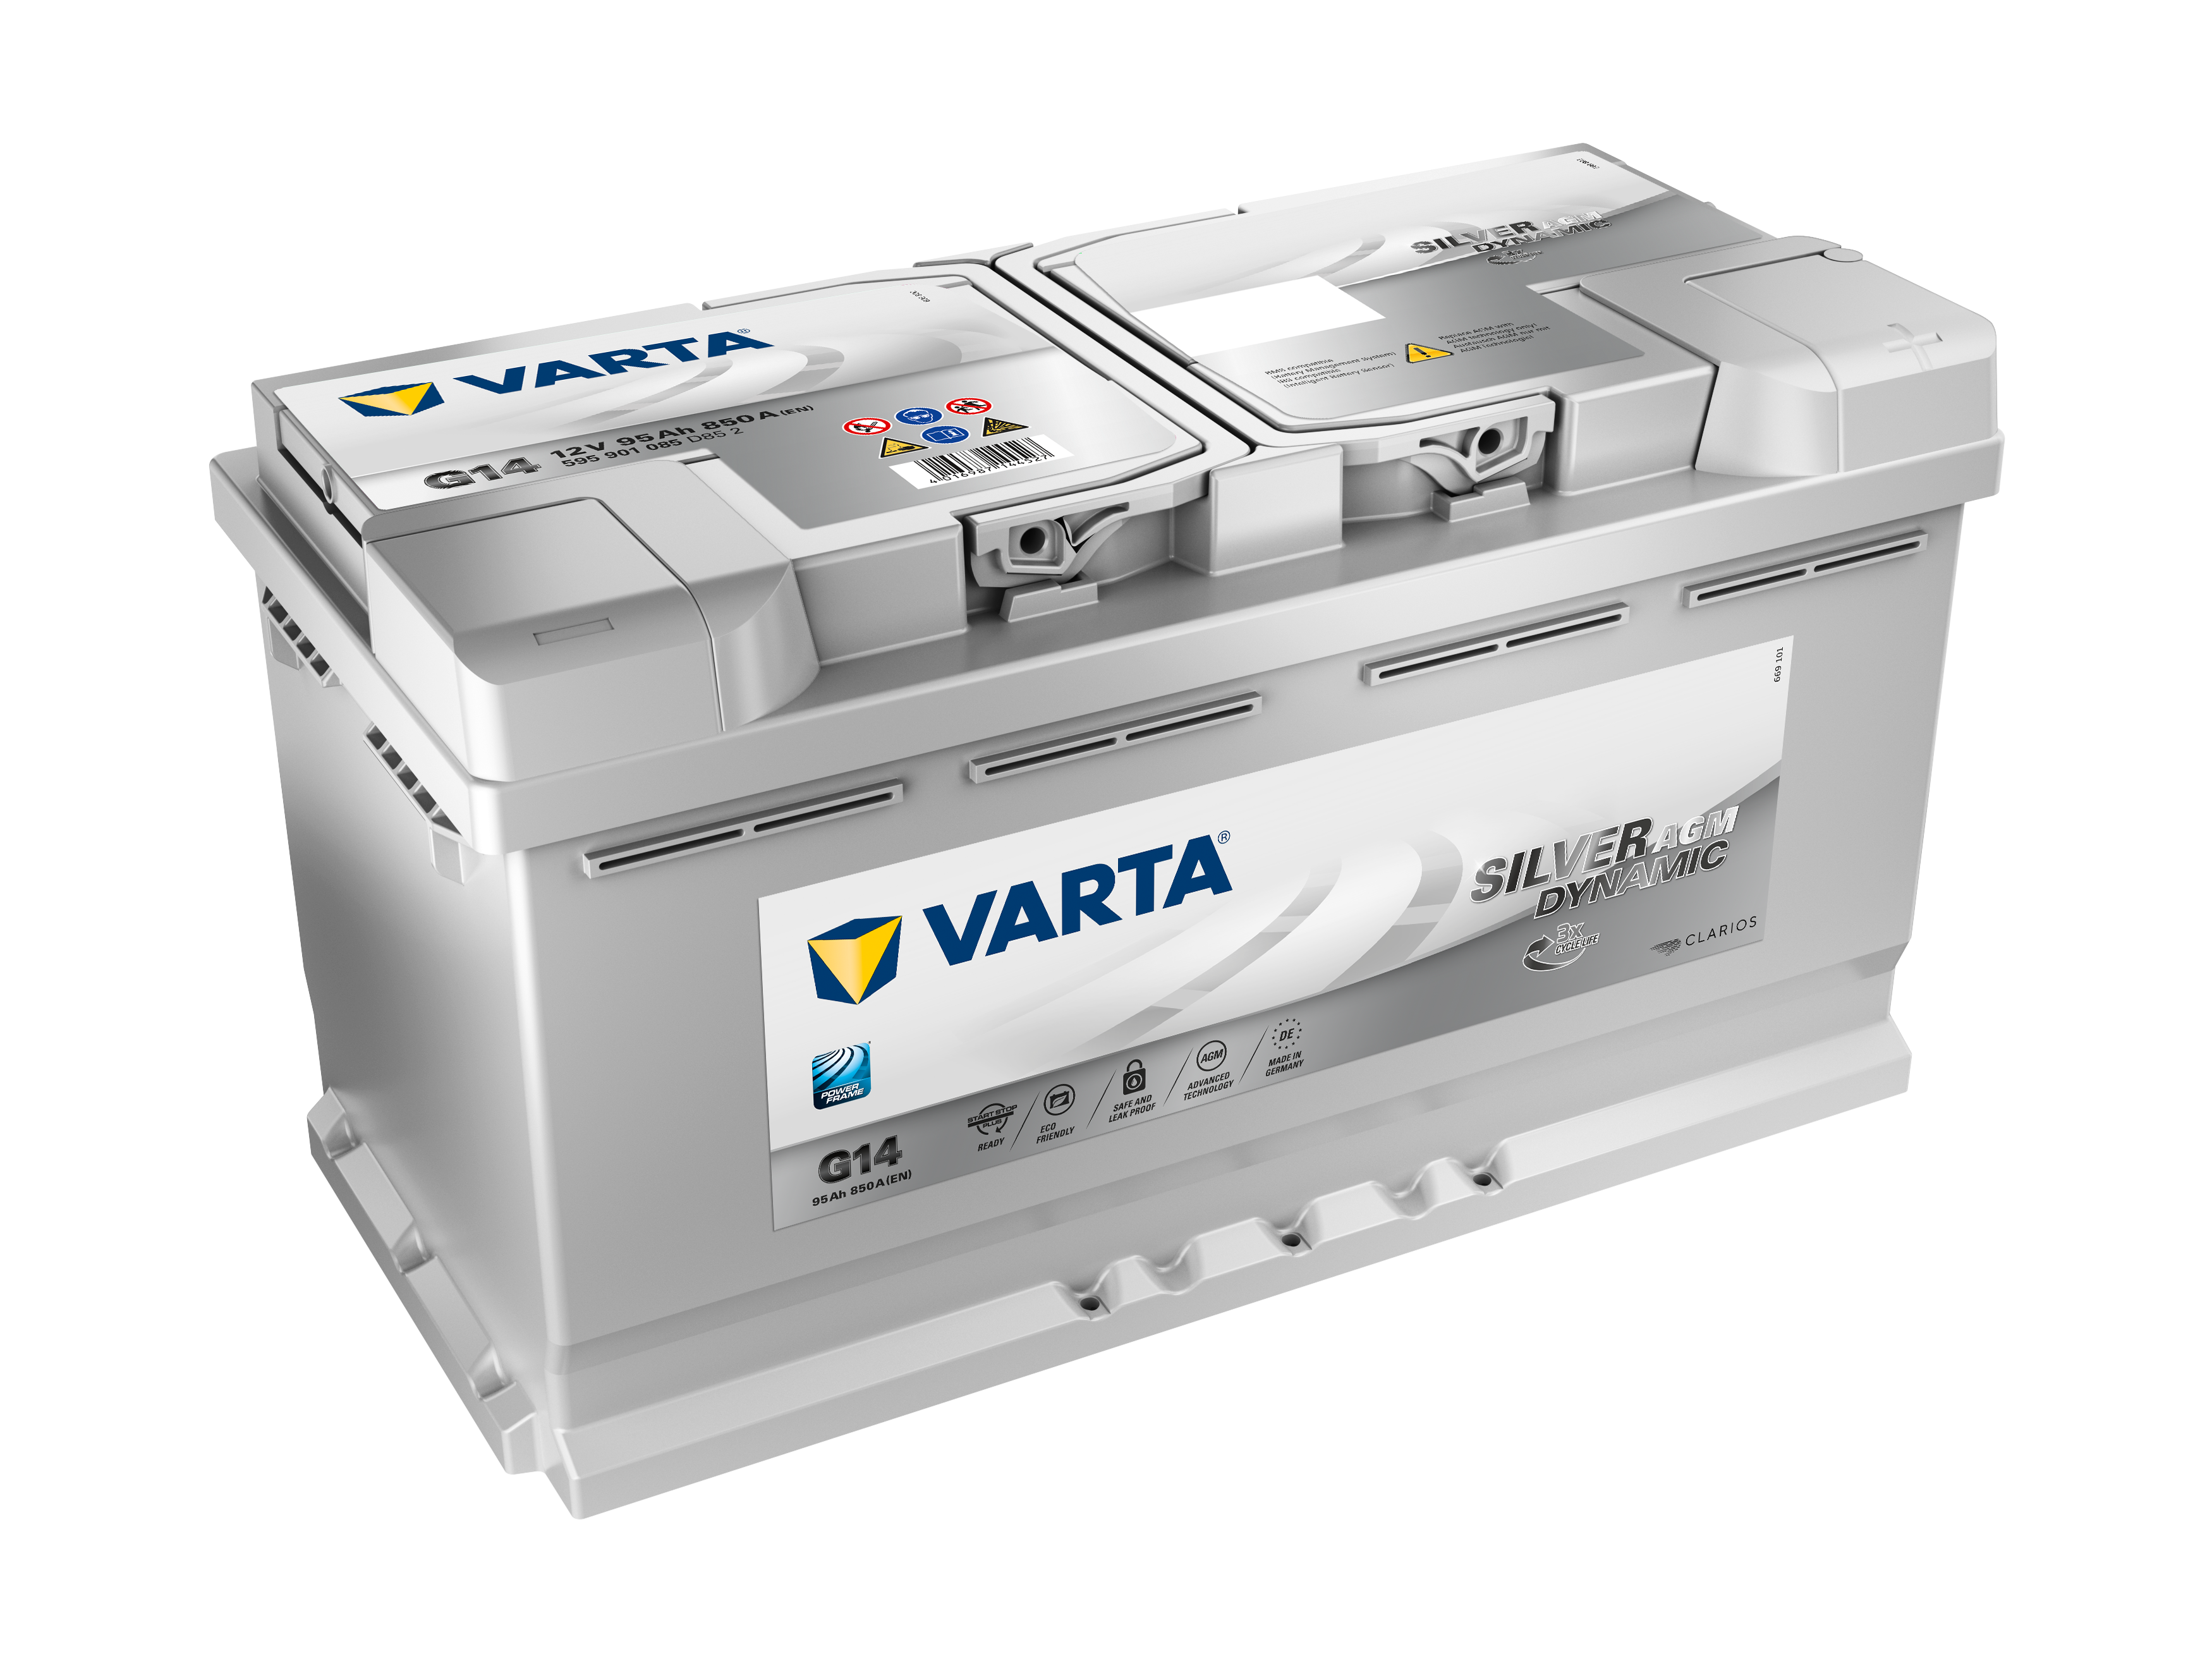 VARTA G14 59501 AGM Start-Stop